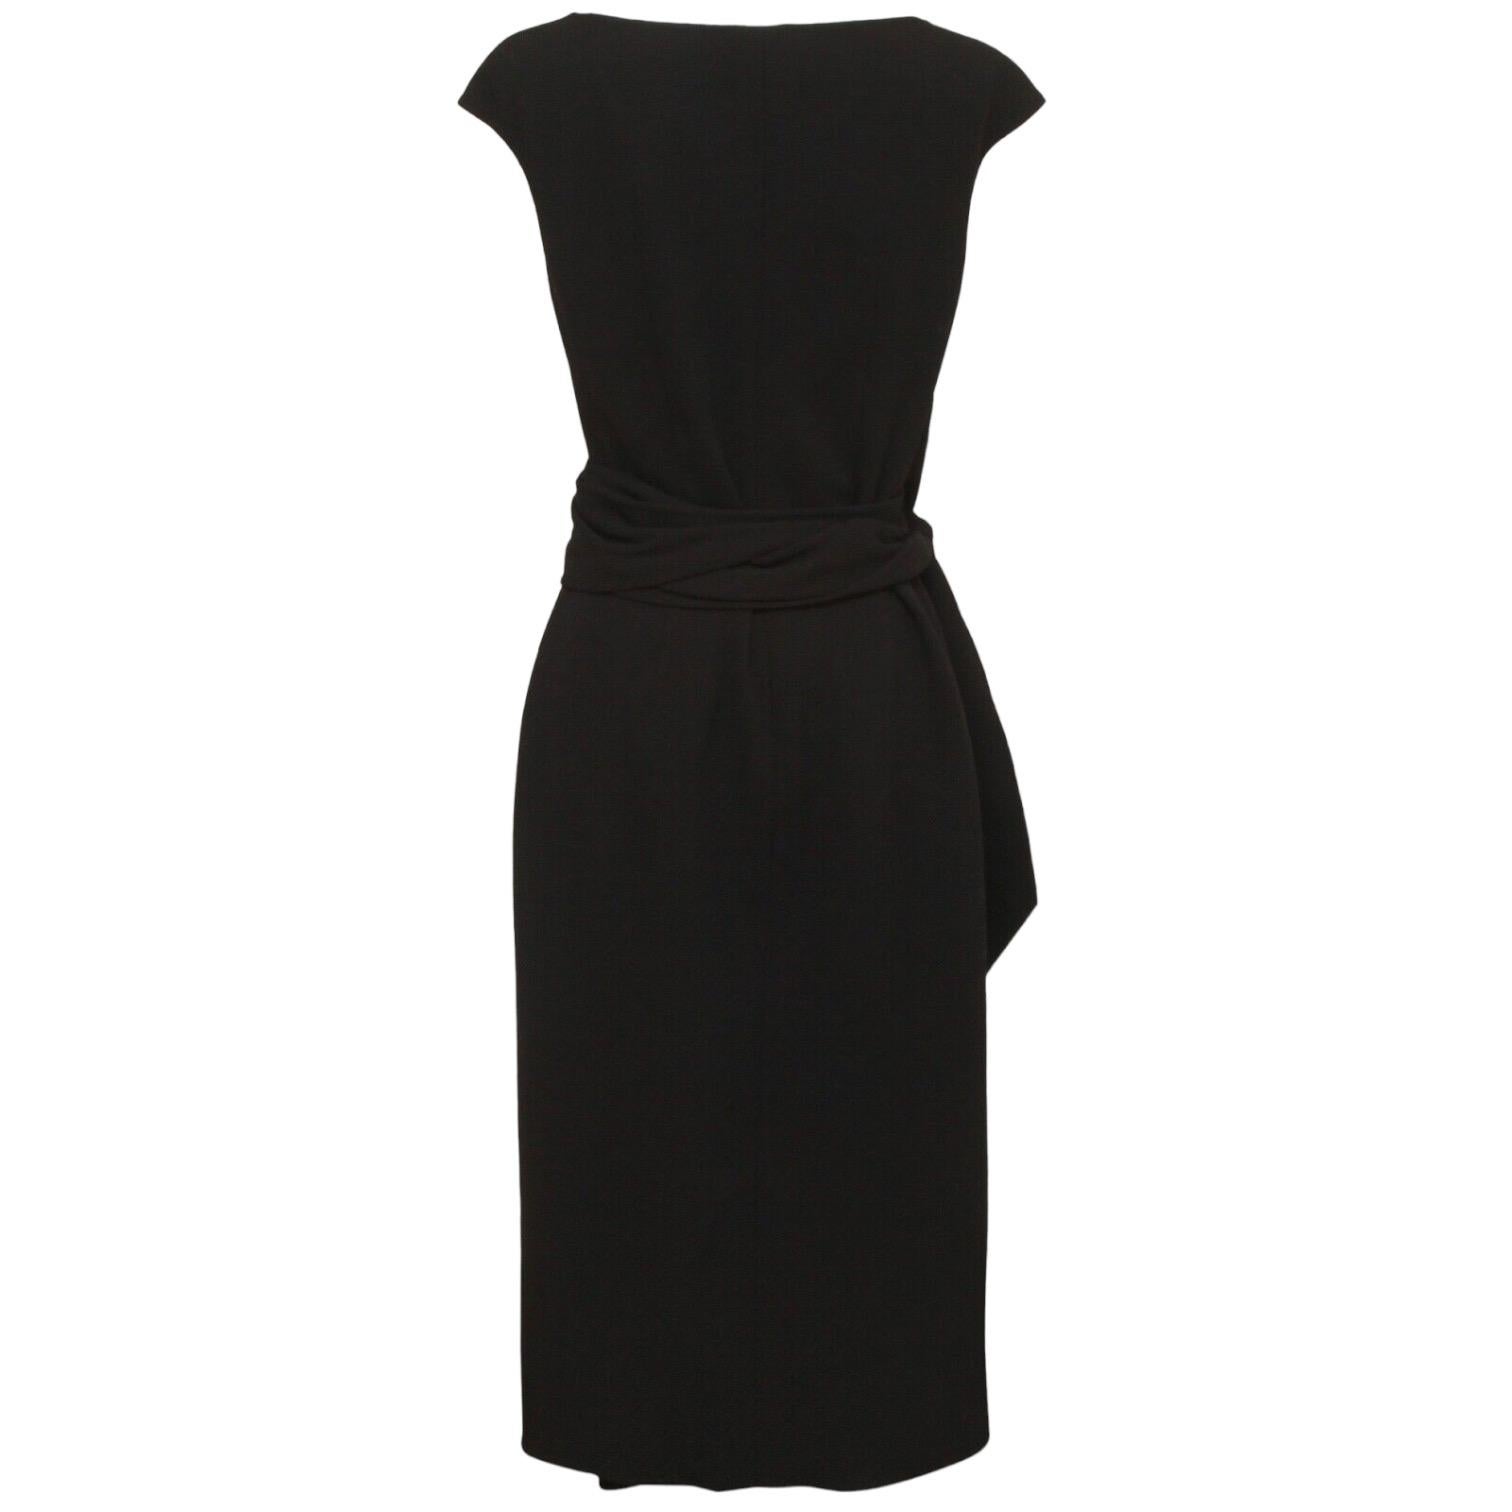 OSCAR DE LA RENTA Dress Black Sleeveless Wrap Knit Sz 8 NWT $2190 For Sale 3